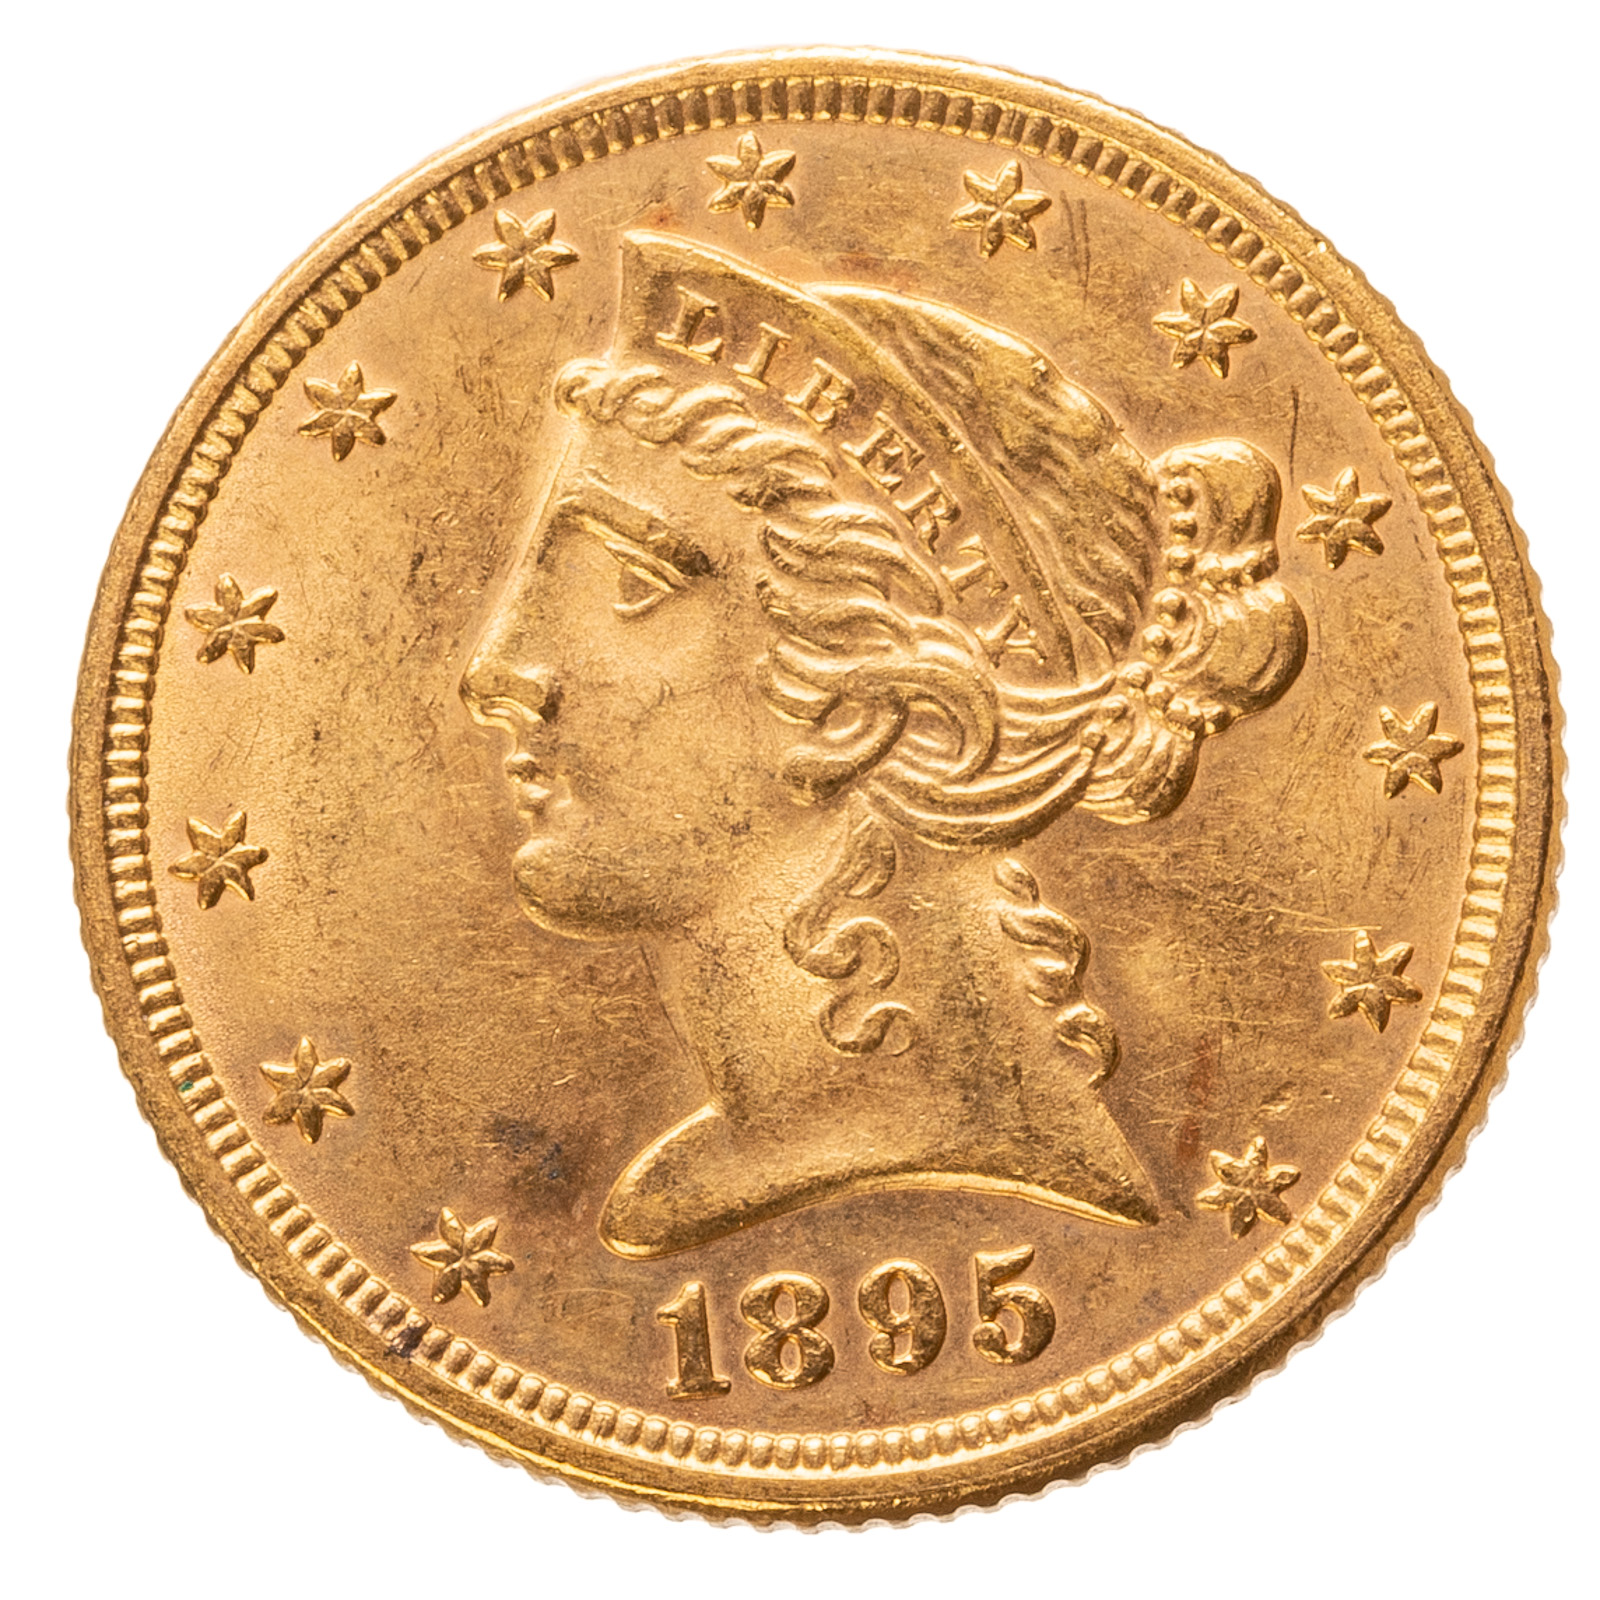 1895 5 LIBERTY GOLD HALF EAGLE 2ea04f